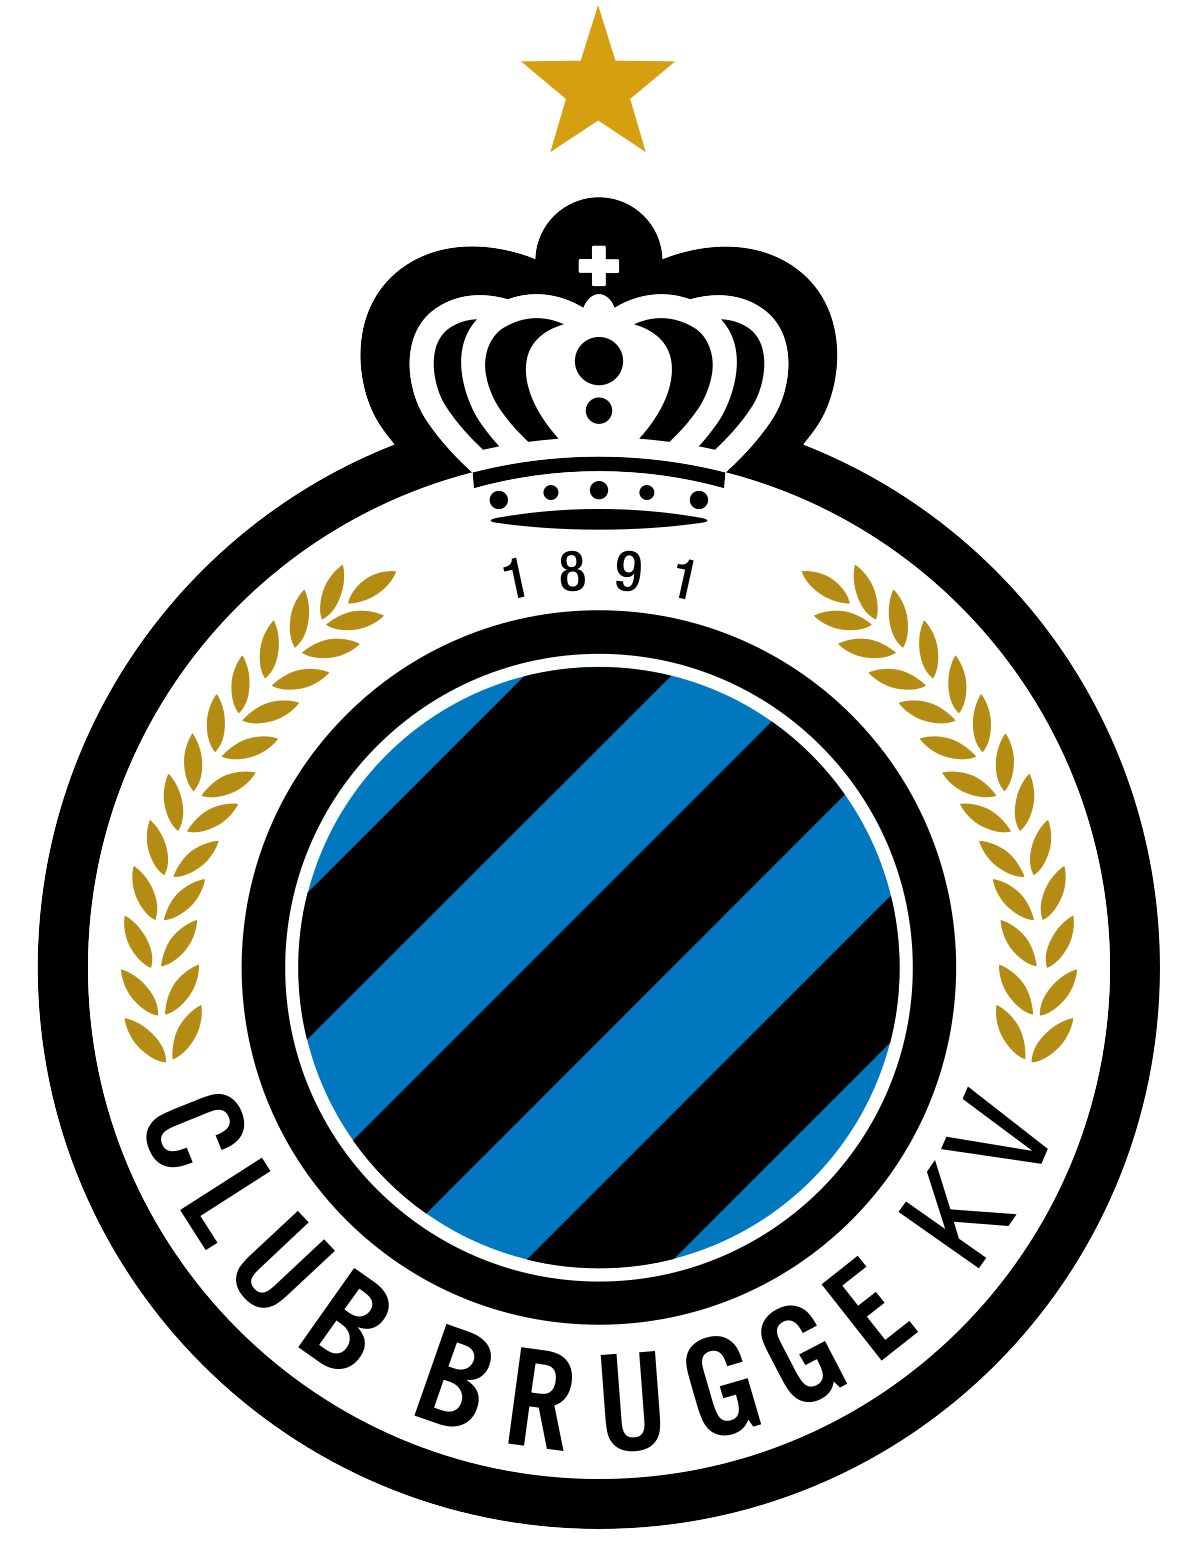 eClub Brugge